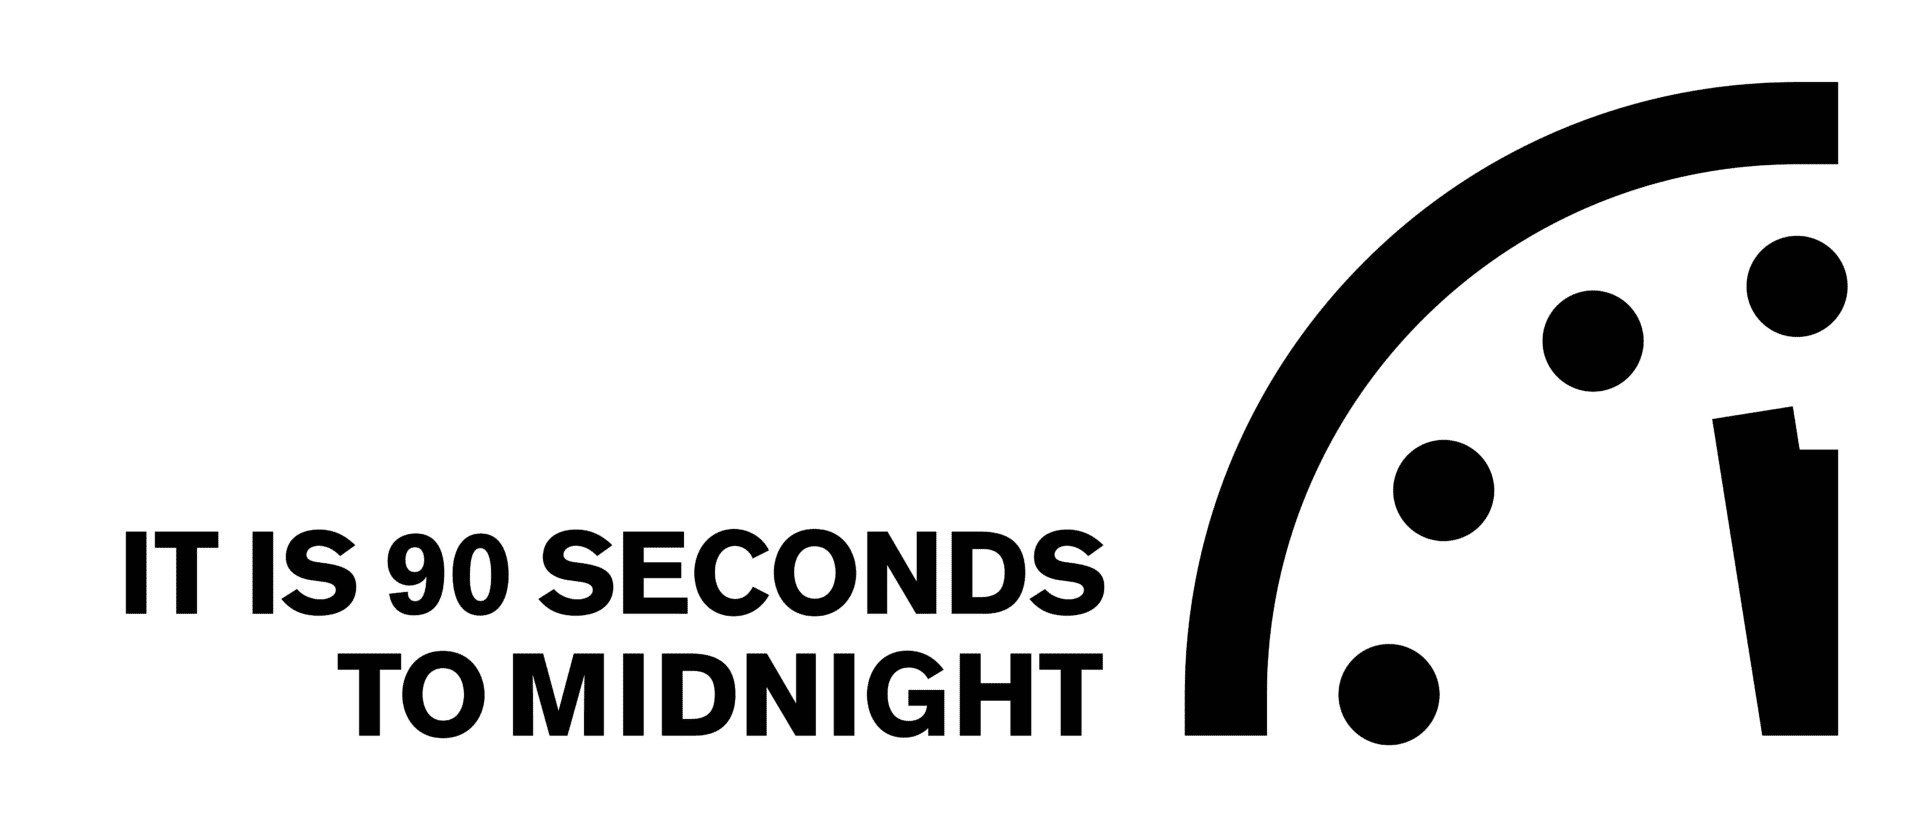 90 seconds. 100 Seconds to Midnight. 100 Секунд до Судного дня. Часы Судного дня 100 секунд. Часы до полуночи.